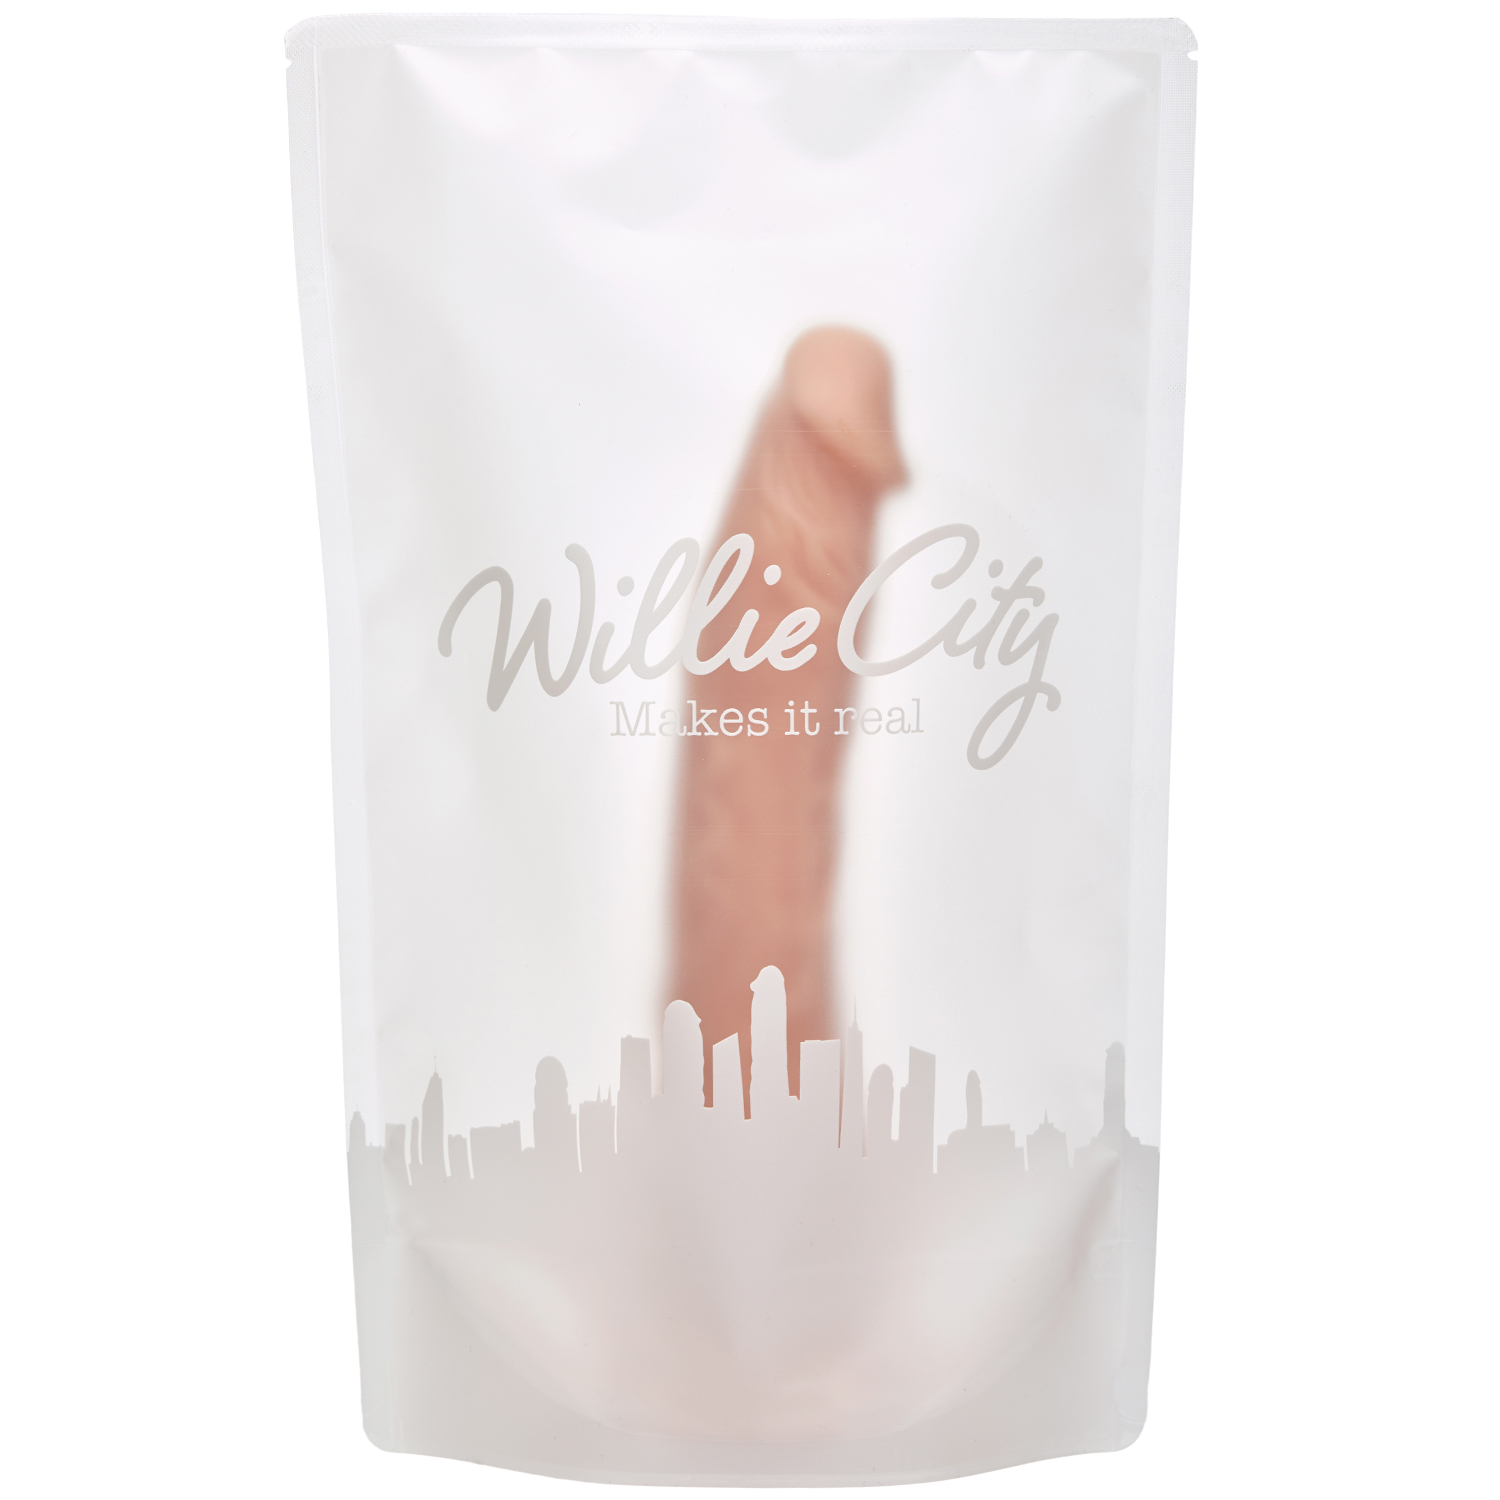 Willie City Willie City Realistisk Dildo med Sugekopp 23 cm - Beige